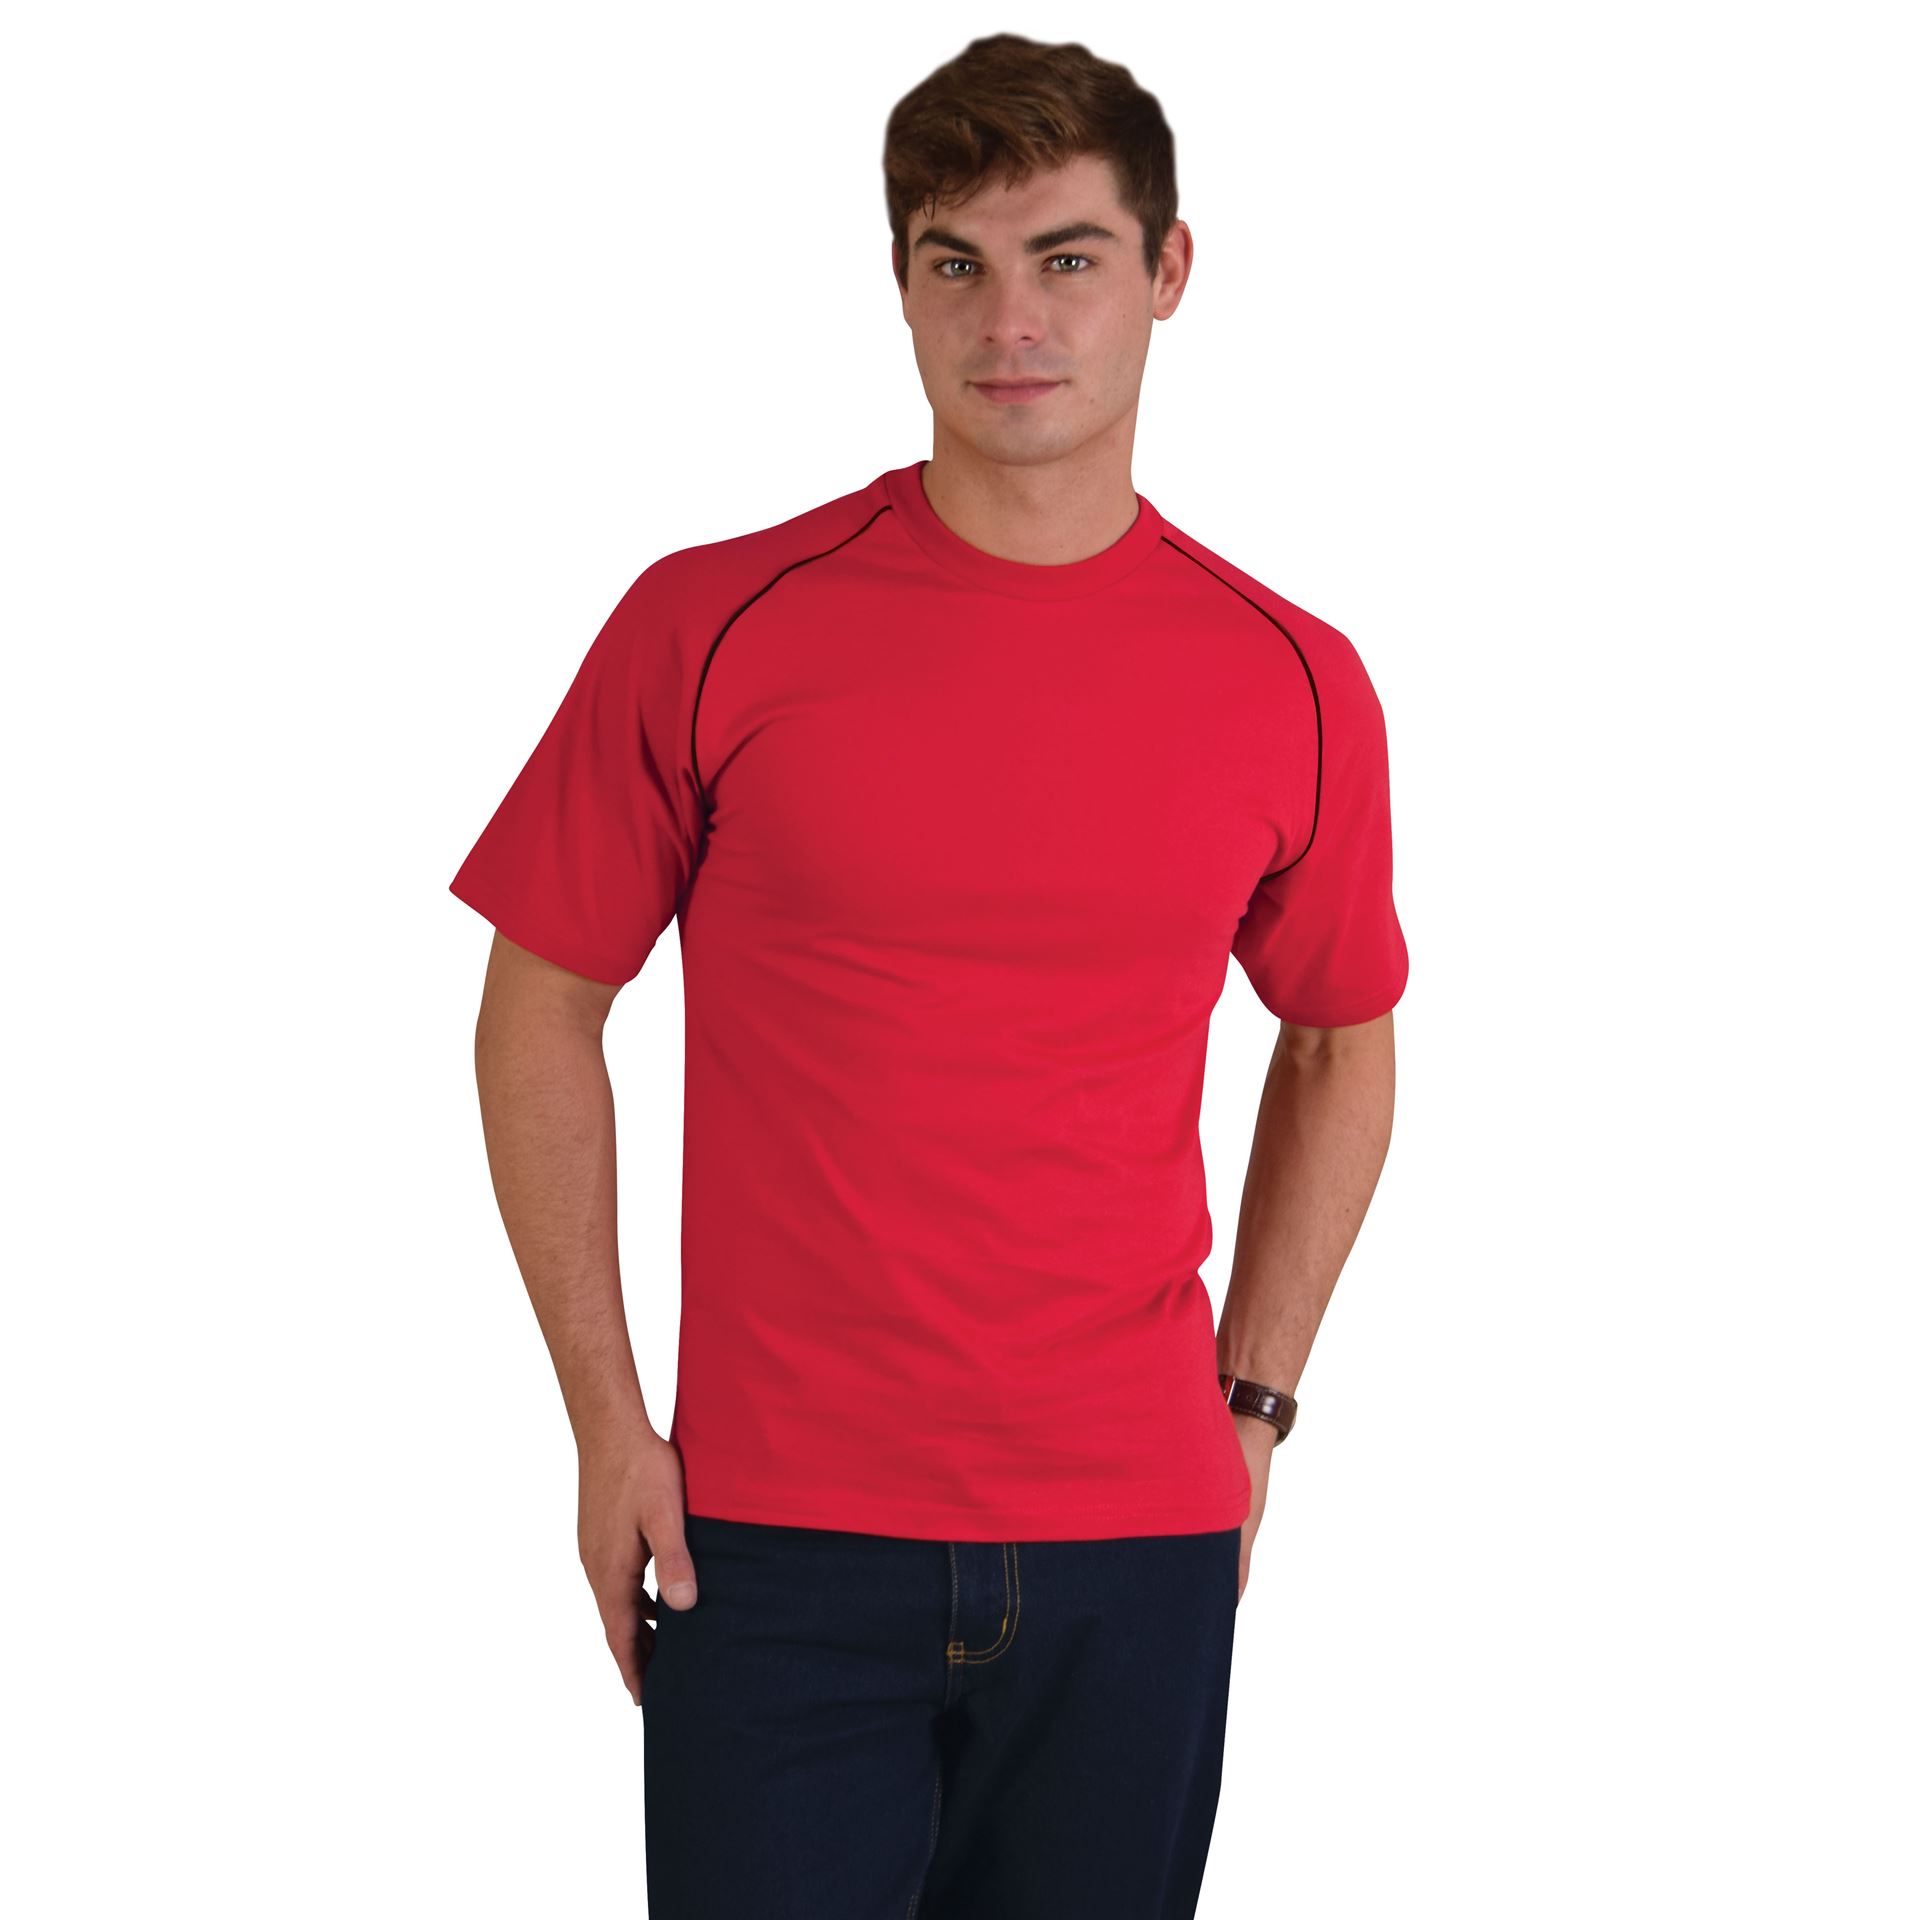 Raglan Trim T-Shirt - Avail in: White/Navy, Red/Black, Black/Gre